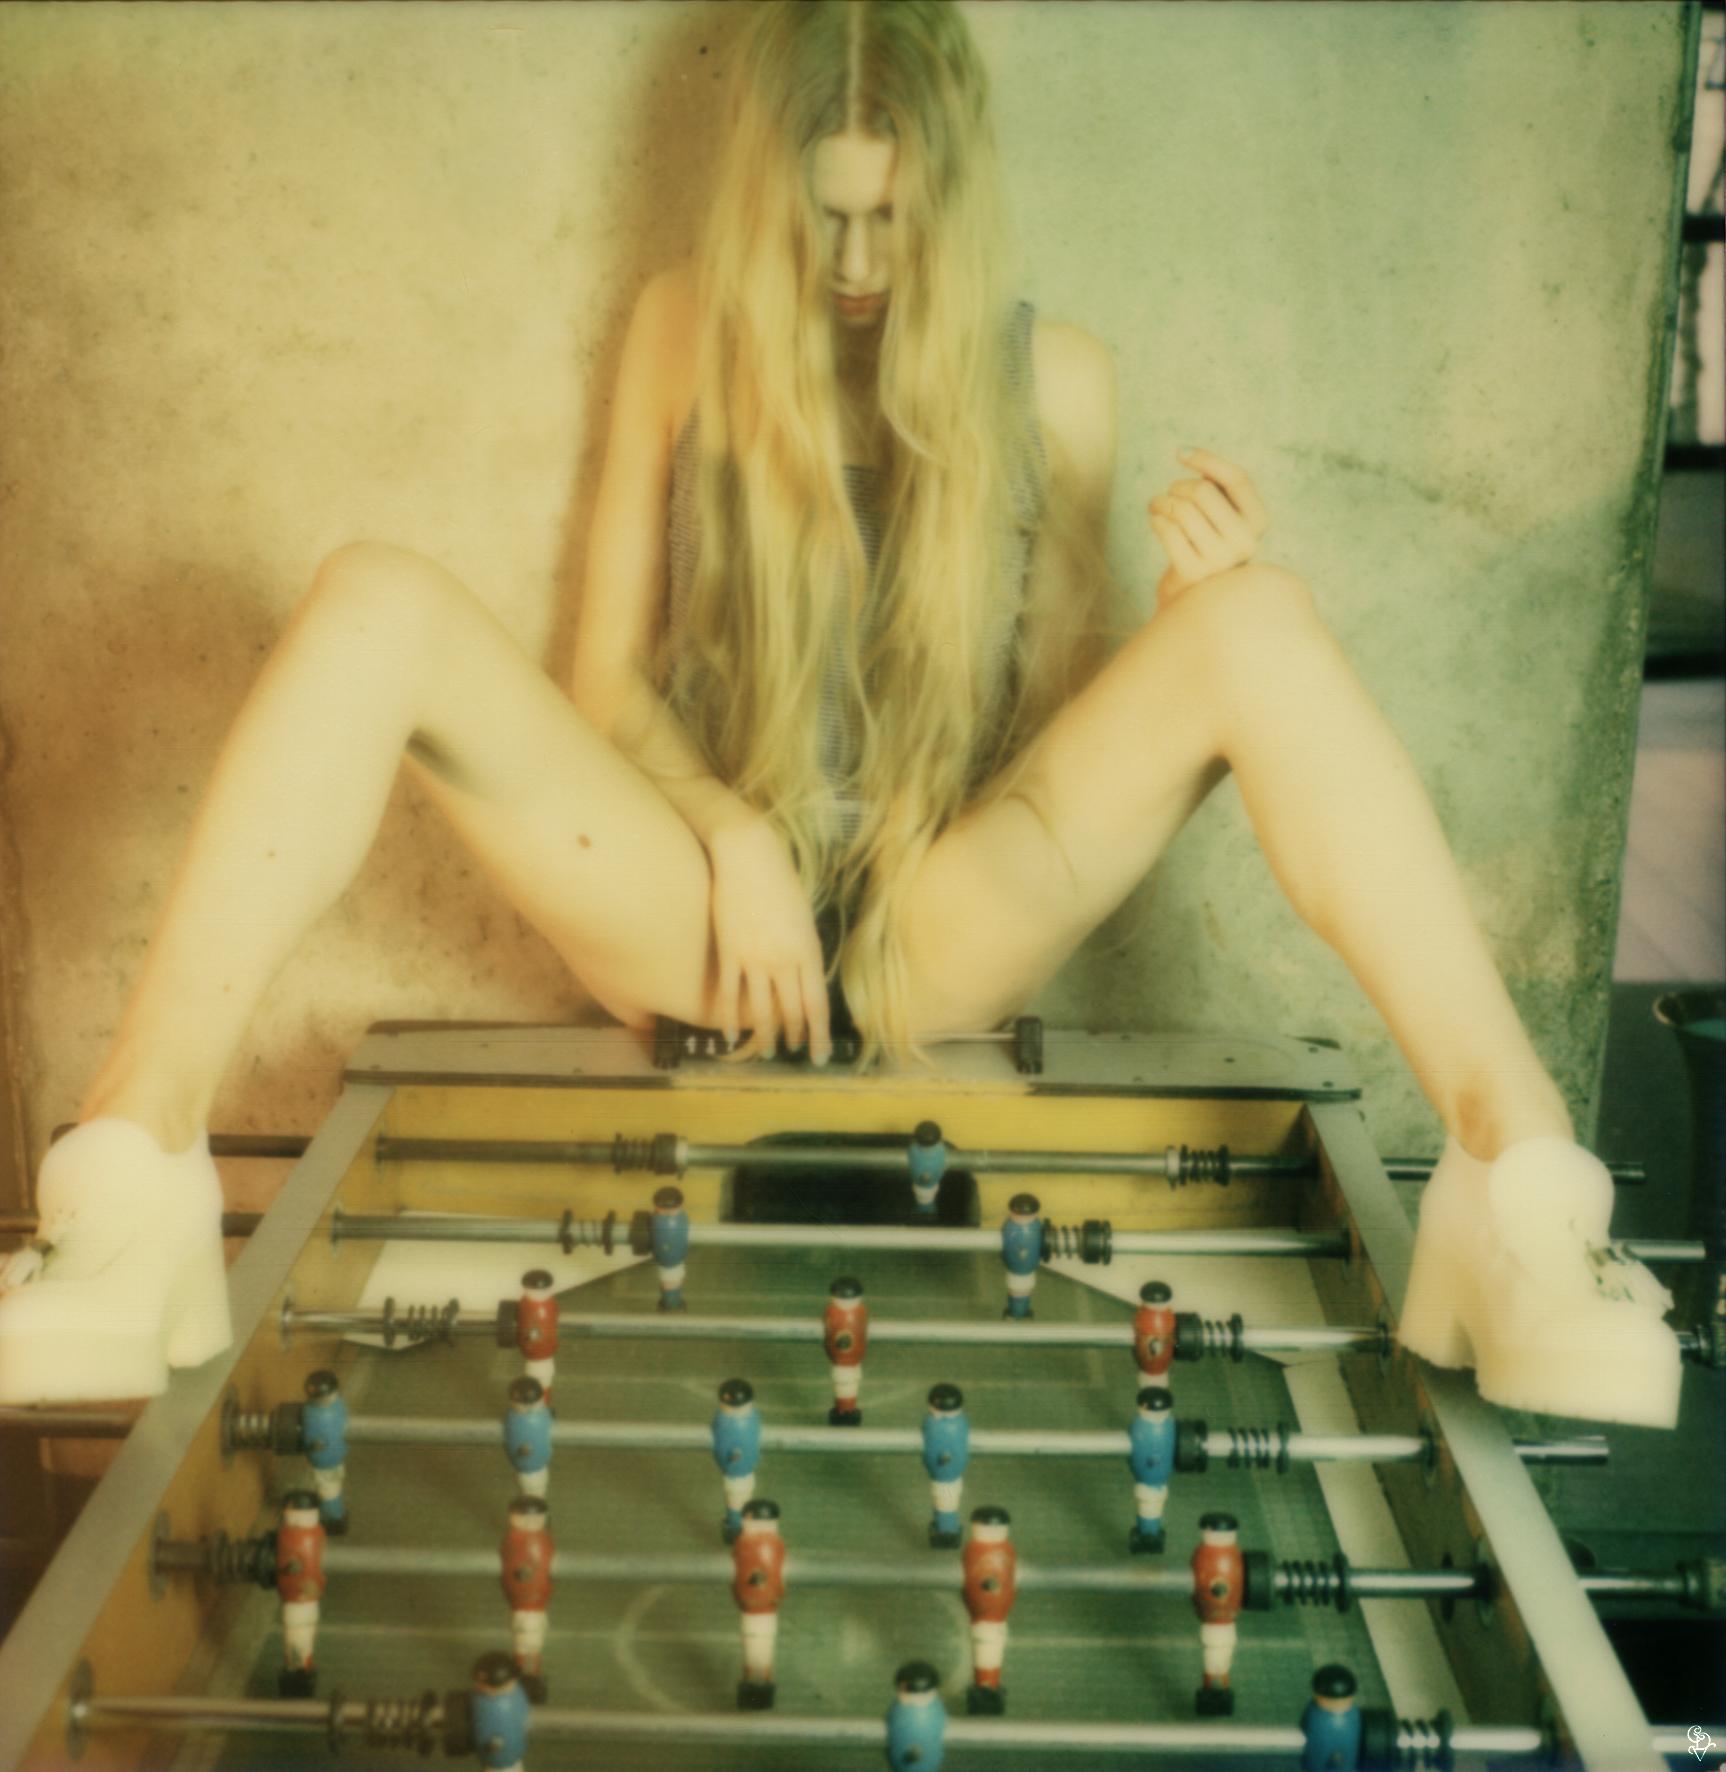 Carmen de Vos Nude Photograph - Kicker - 21 Century, Women, Contemporary, Polaroid, Figurative, Nude